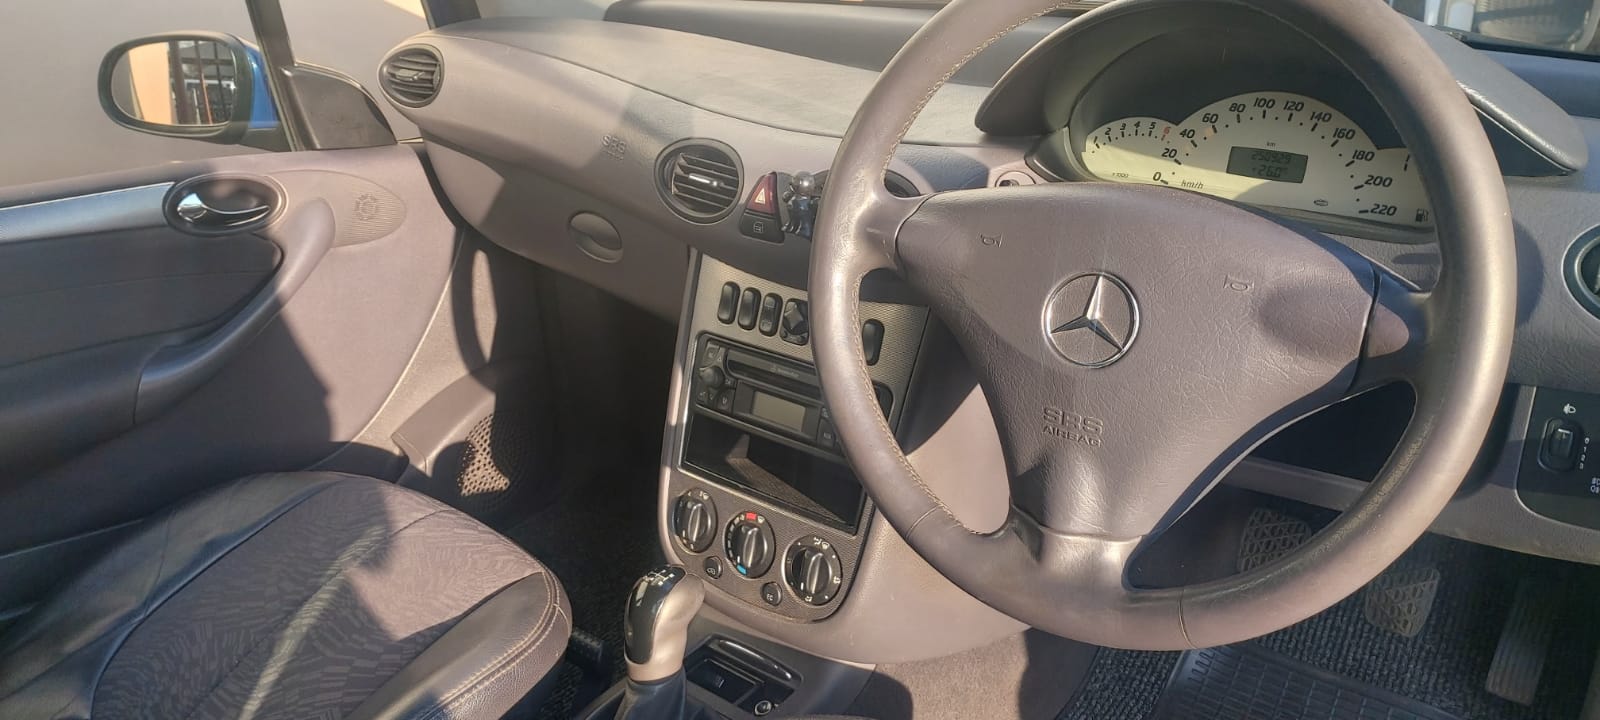 2002 Mercedes Benz 190